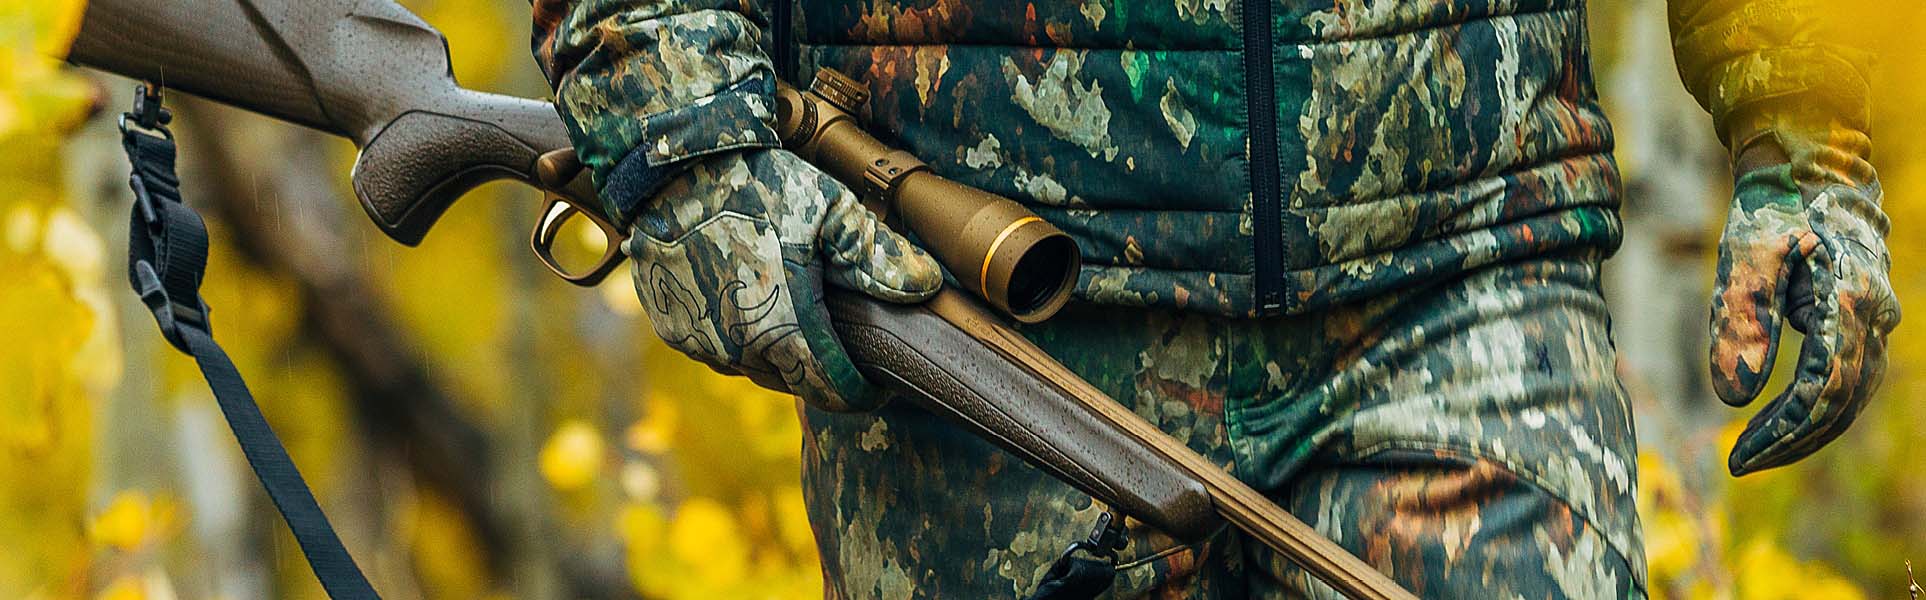 Browning X-Bolt Pro Long Range rifle, for precision hunting | GUNSweek.com